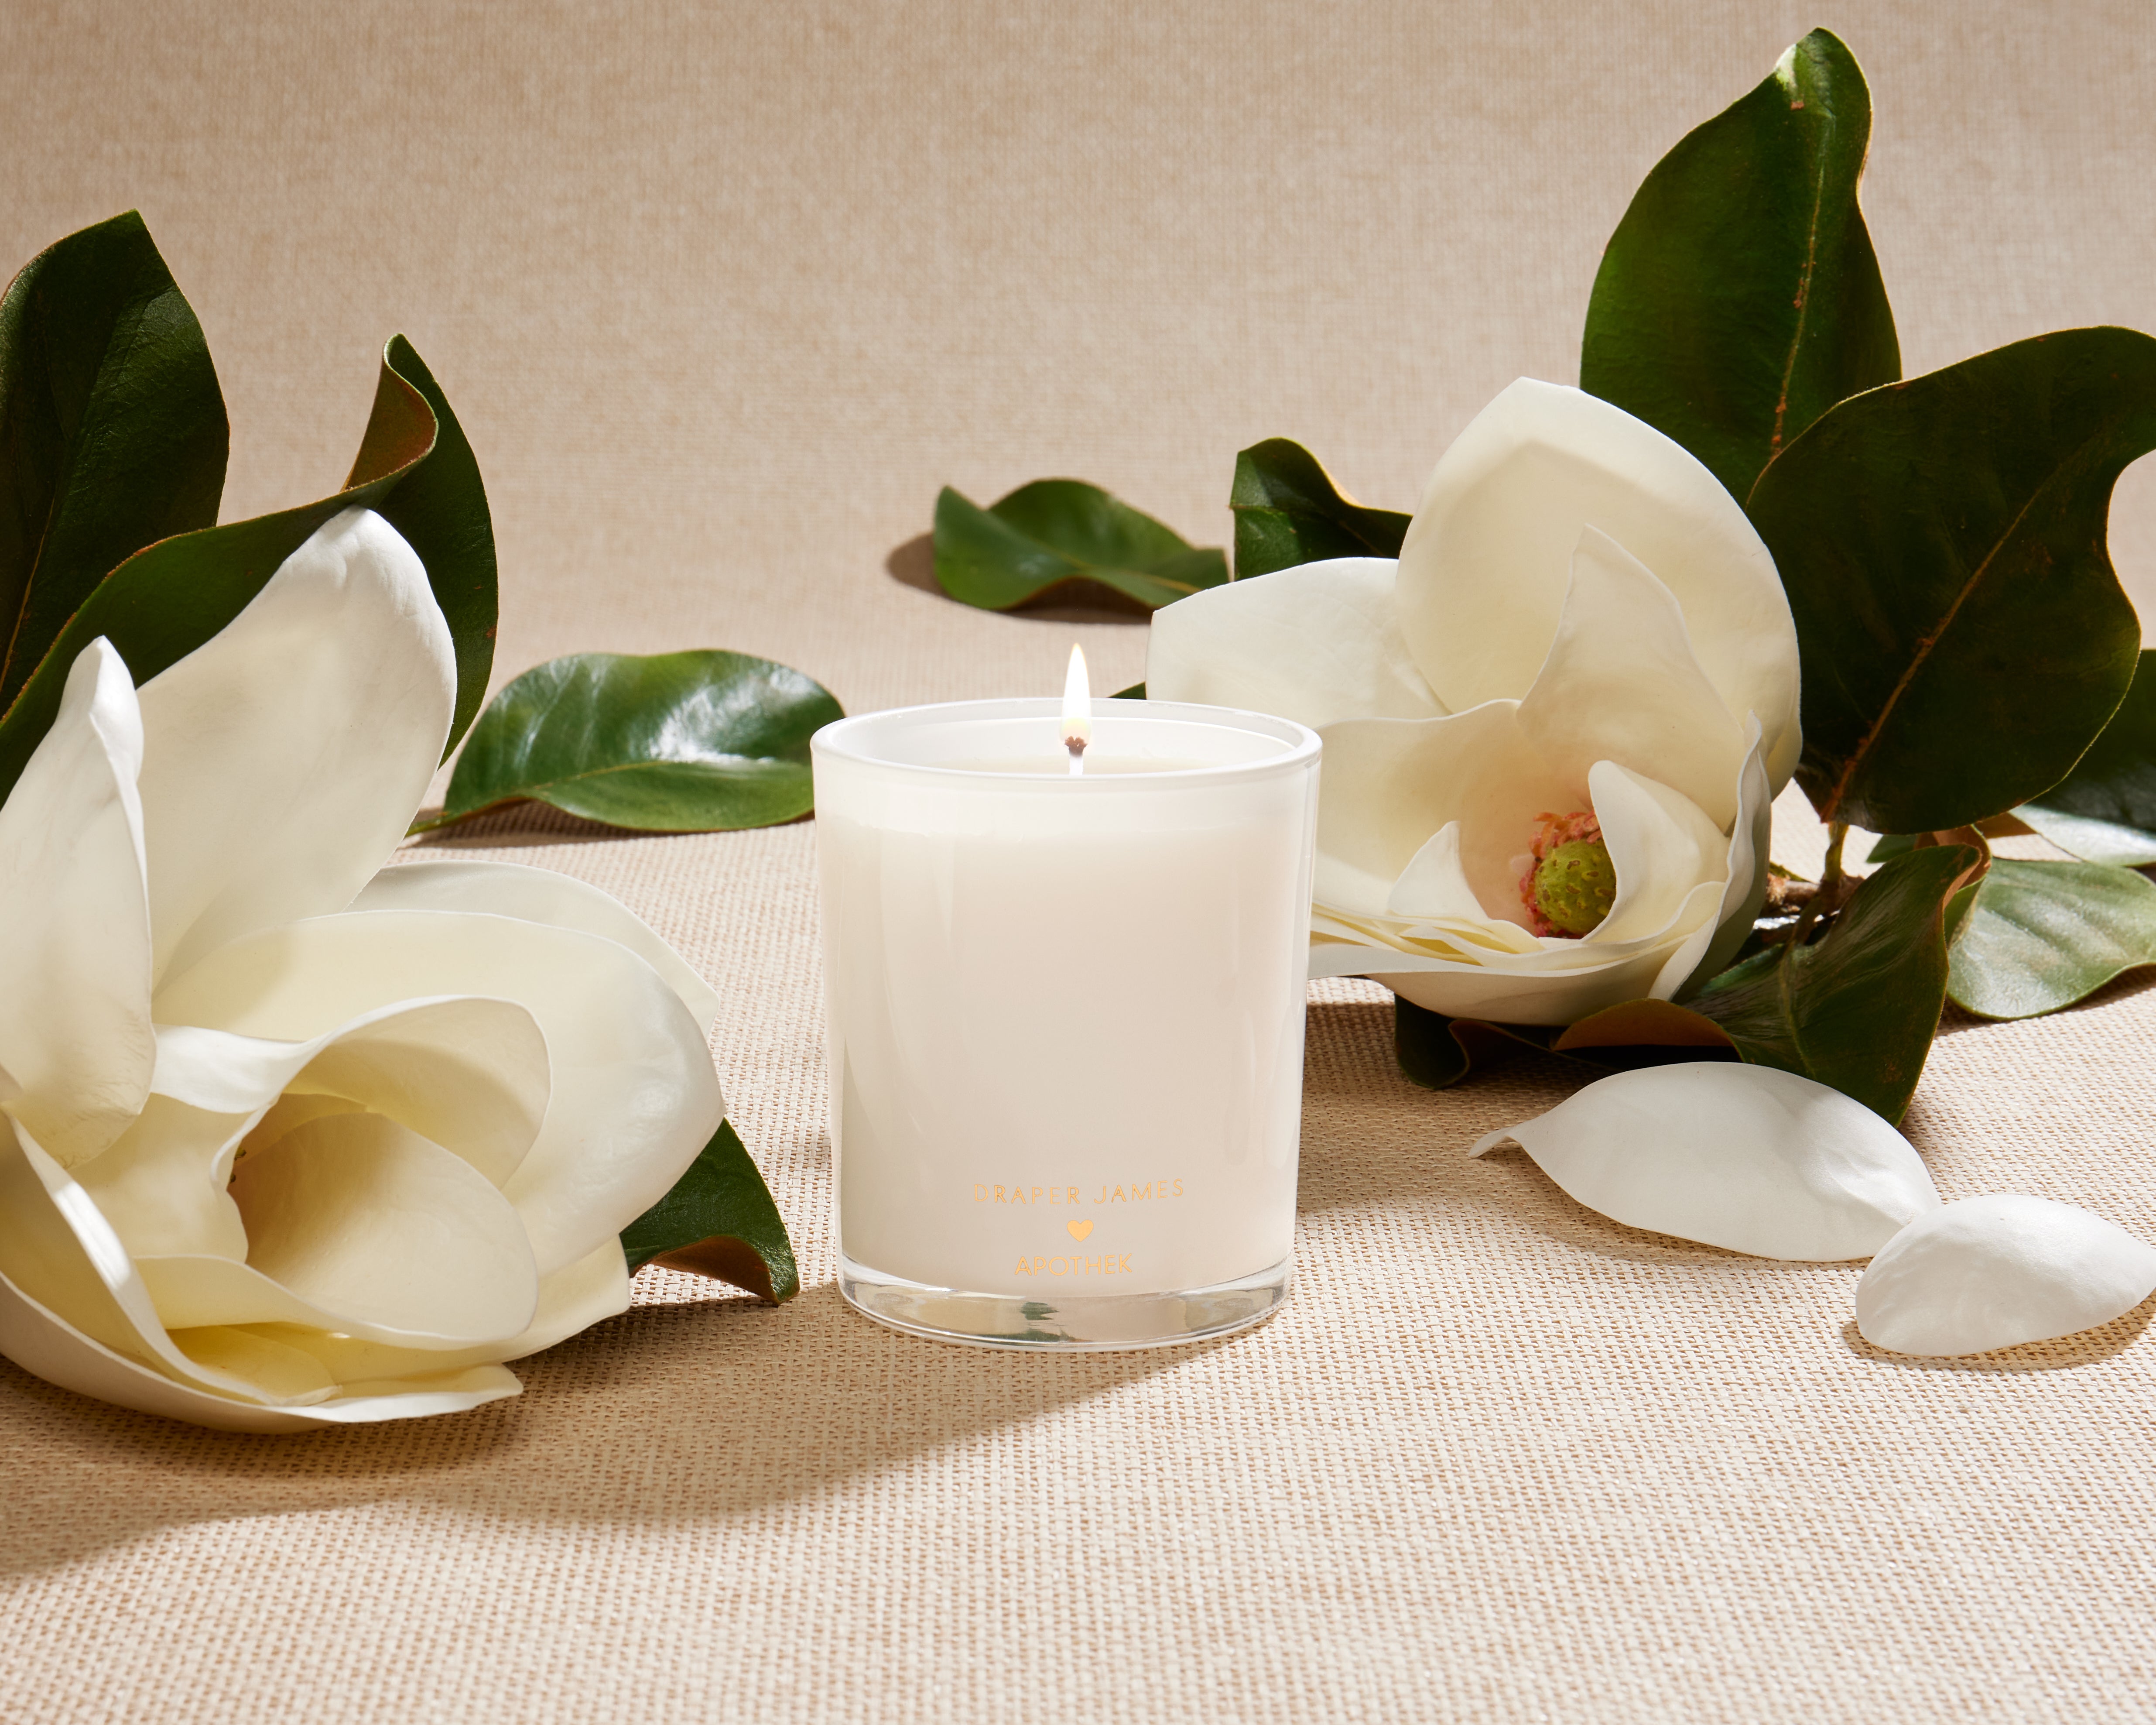 Draper James x Apotheke Candle in White Magnolia